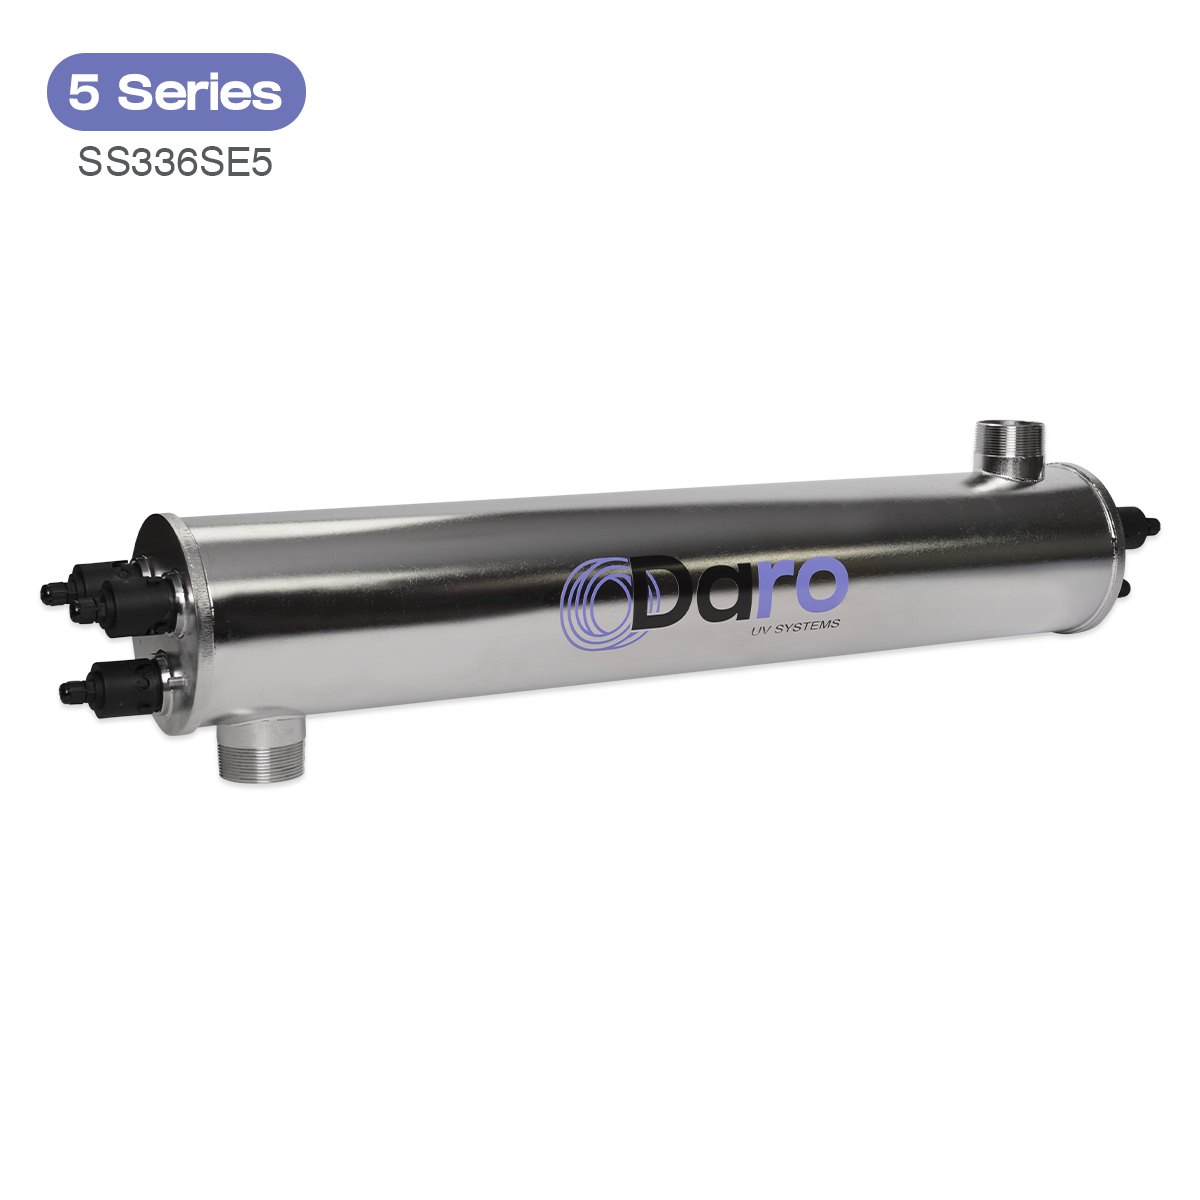 5 Series SS336SE5 Iso Industrial UV System